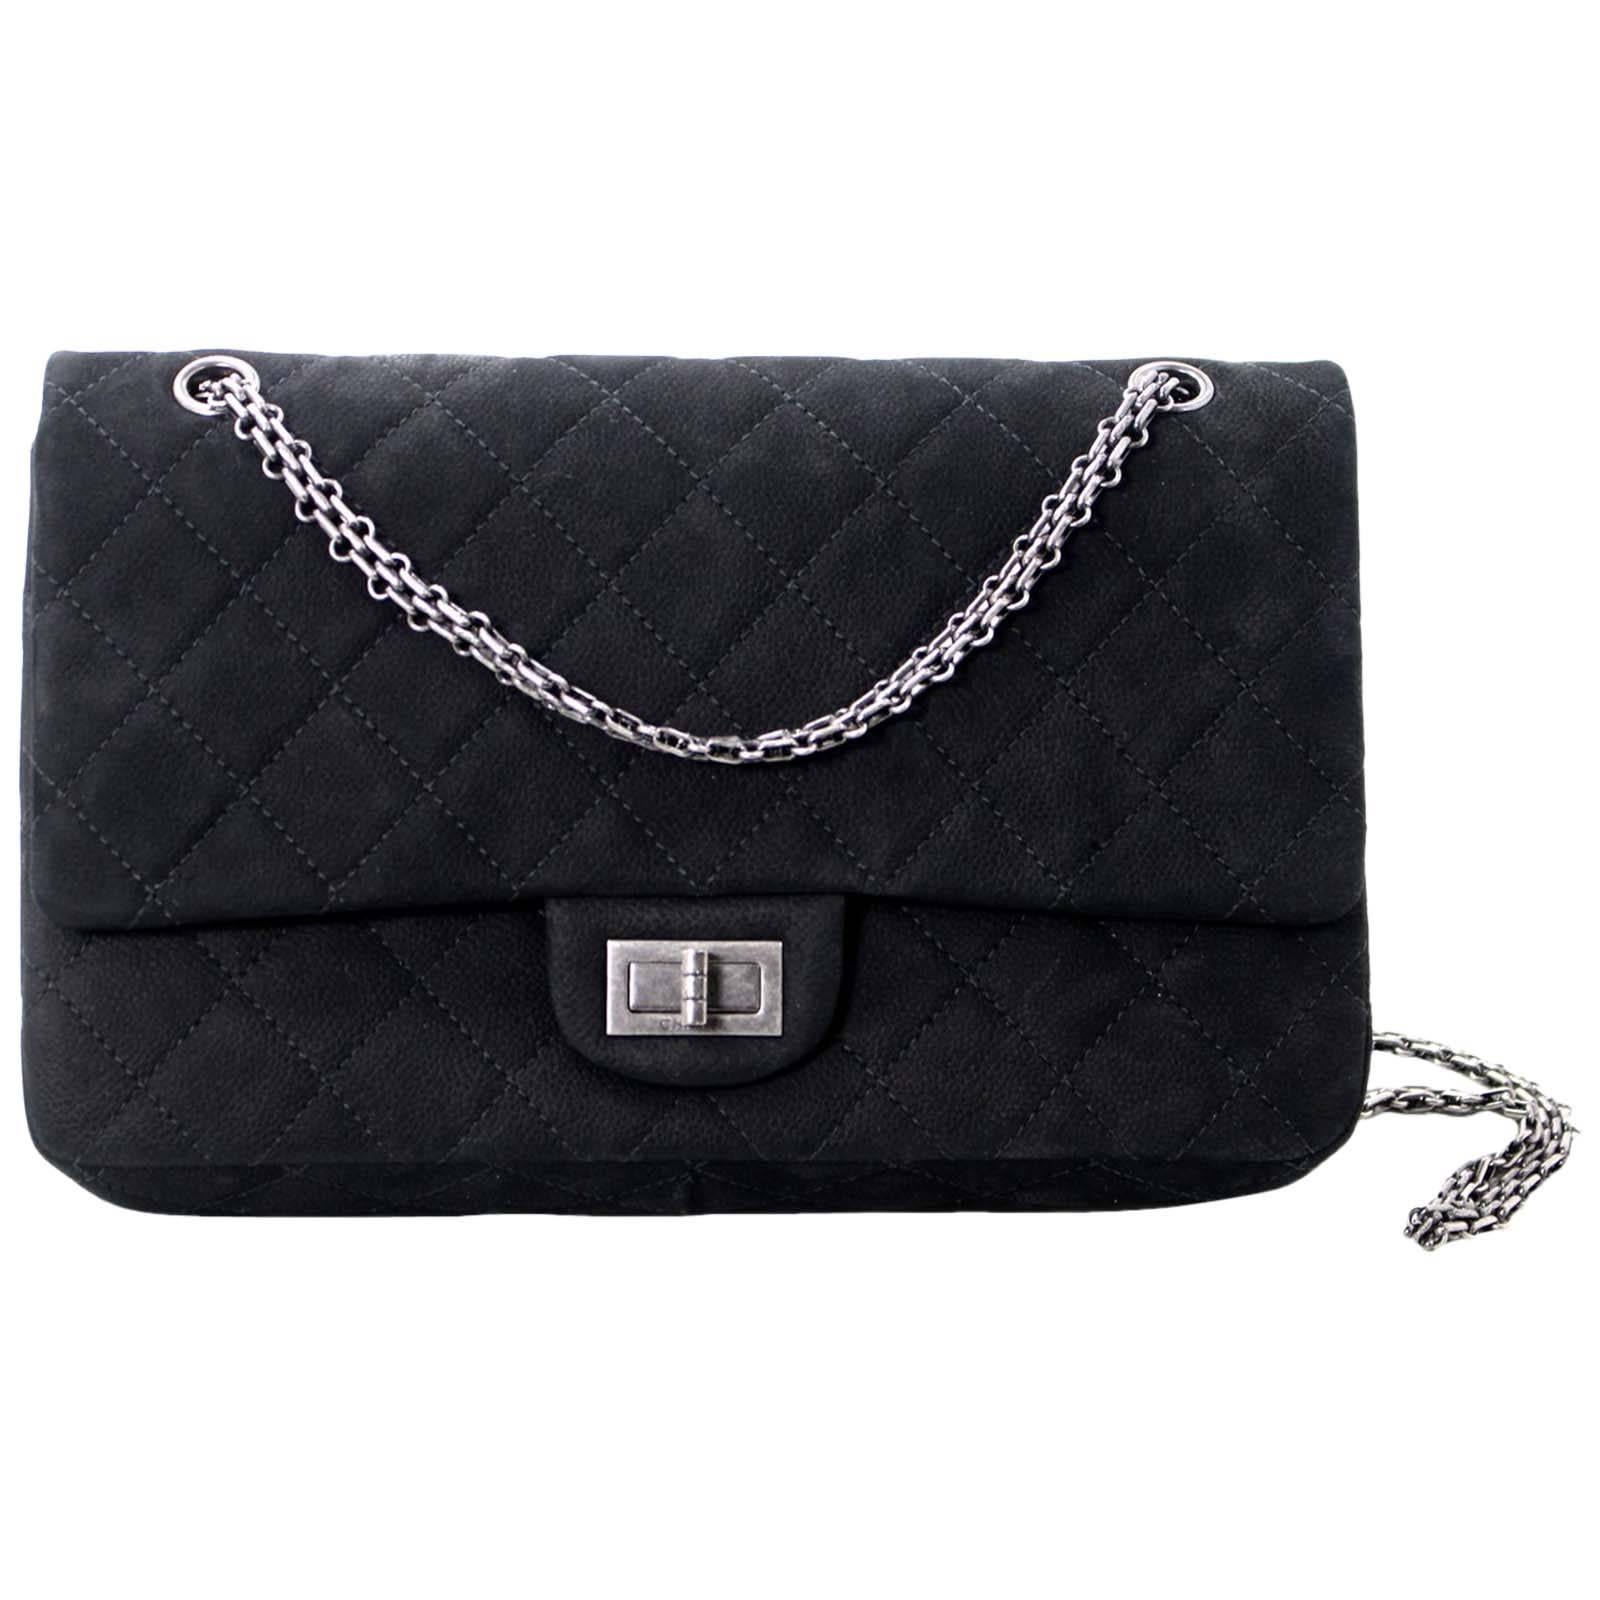 Chanel Black Leather 2.55 Double Flap Bag